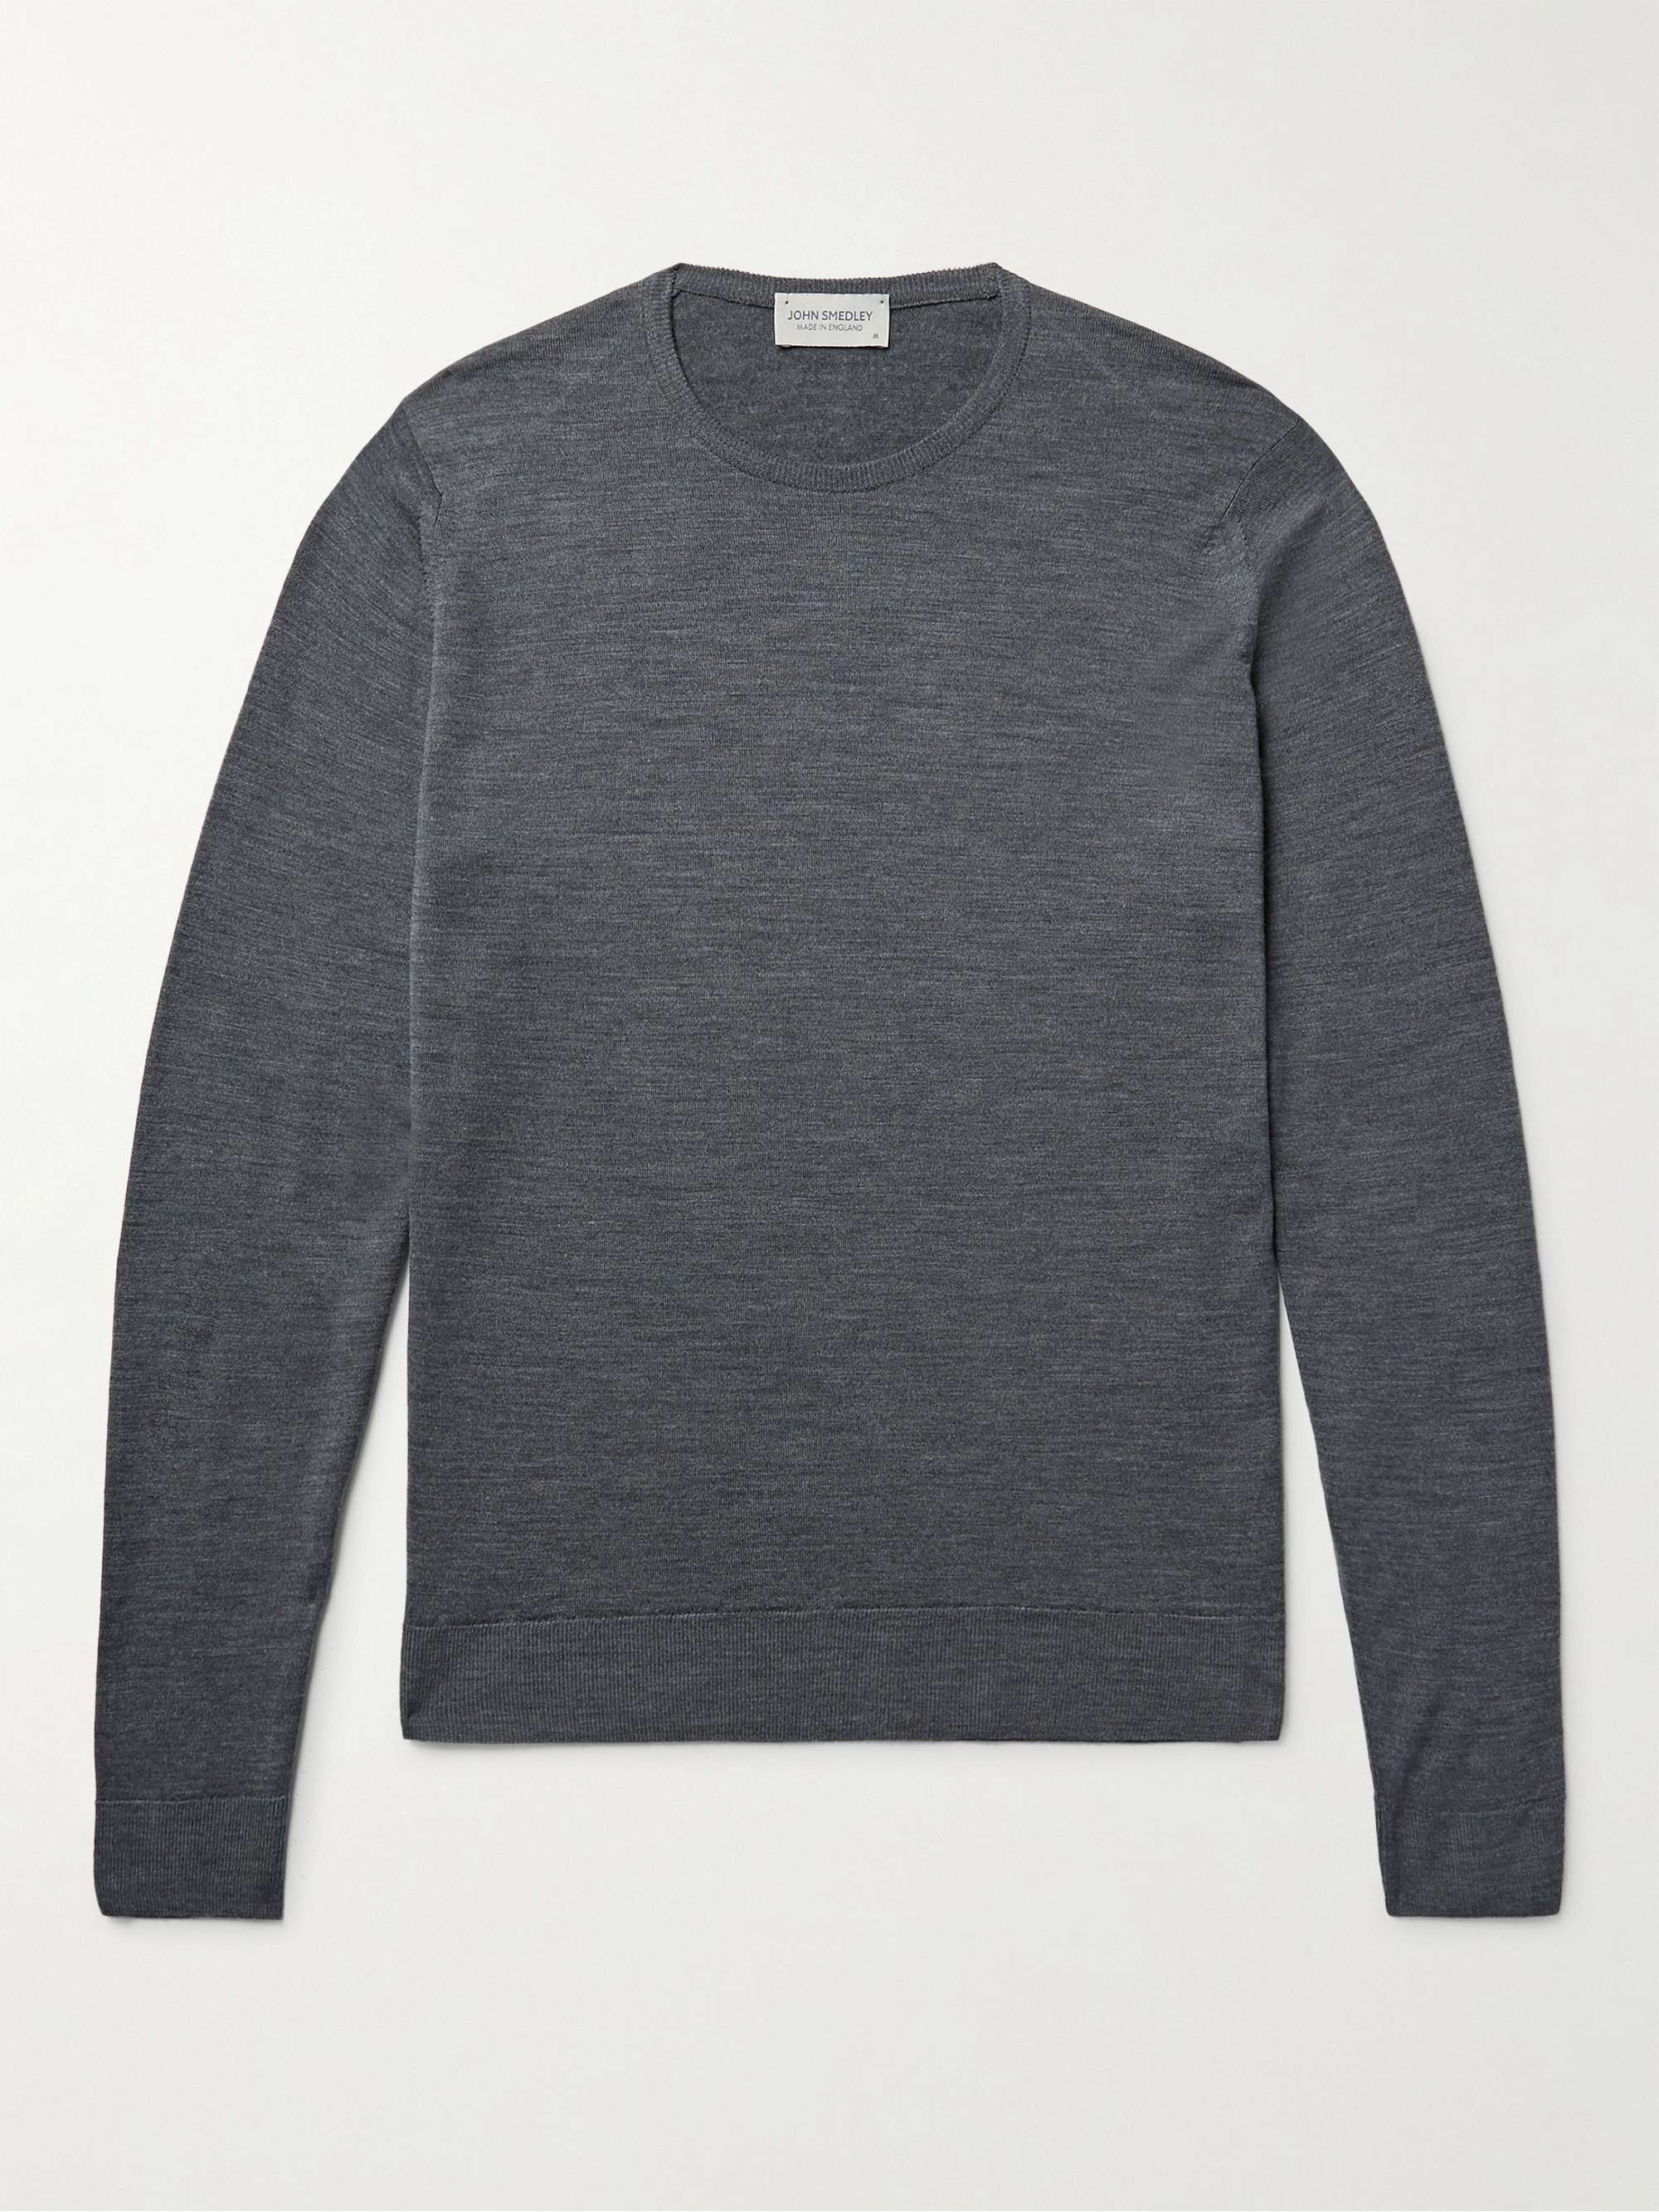 Charcoal Lundy Slim-Fit Merino Wool Sweater | JOHN SMEDLEY | MR PORTER